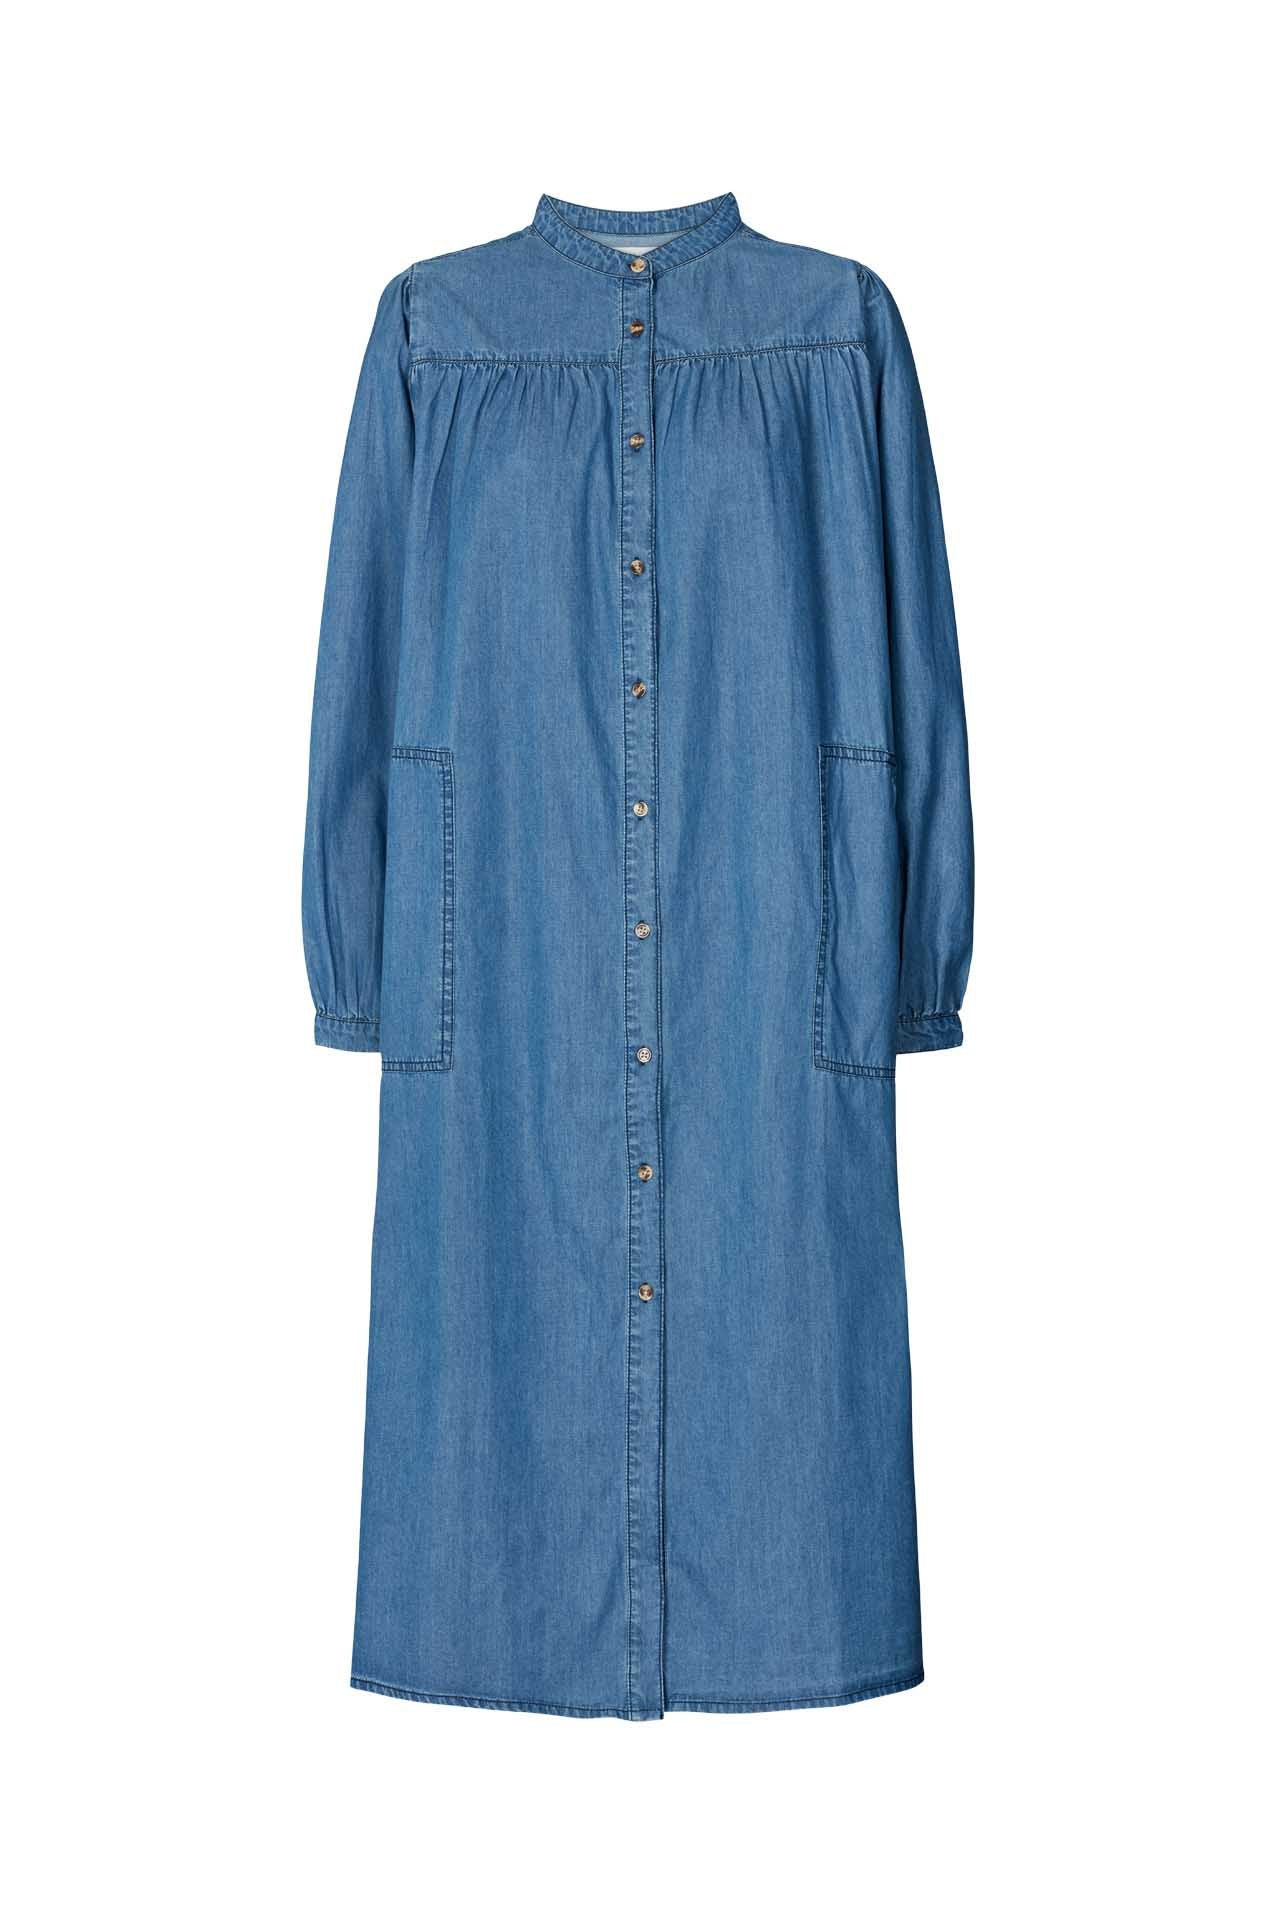 Lollys Laundry Jess Dress Dress 20 Blue